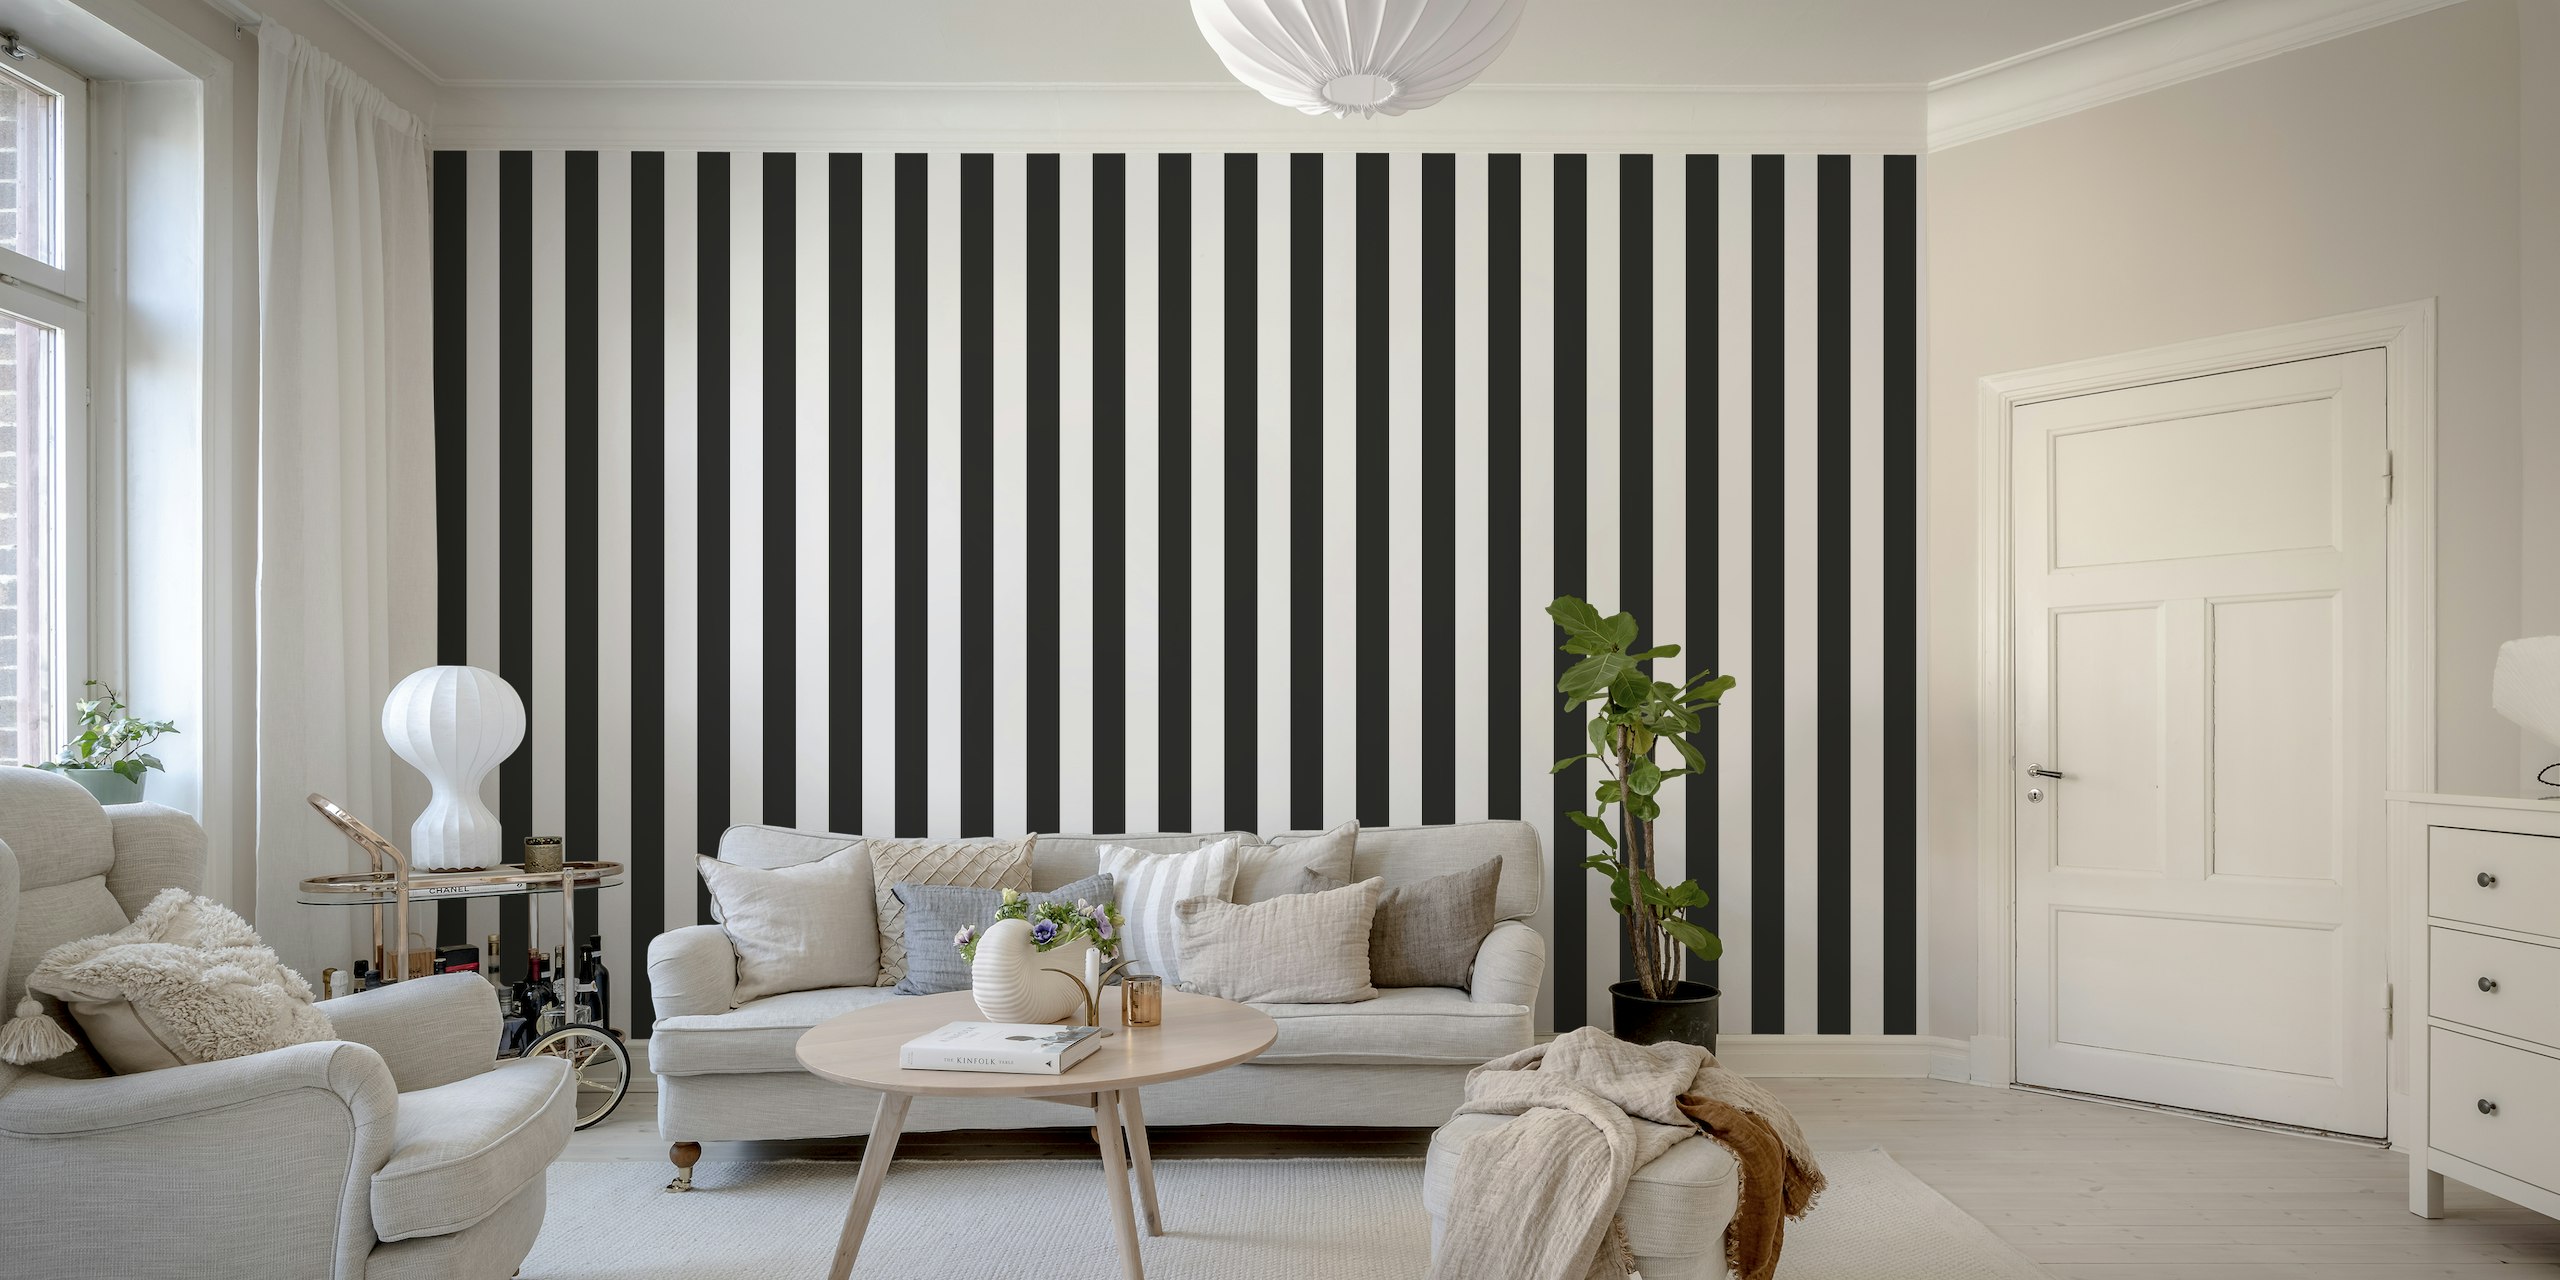 Black and white stripe pattern wallpaper